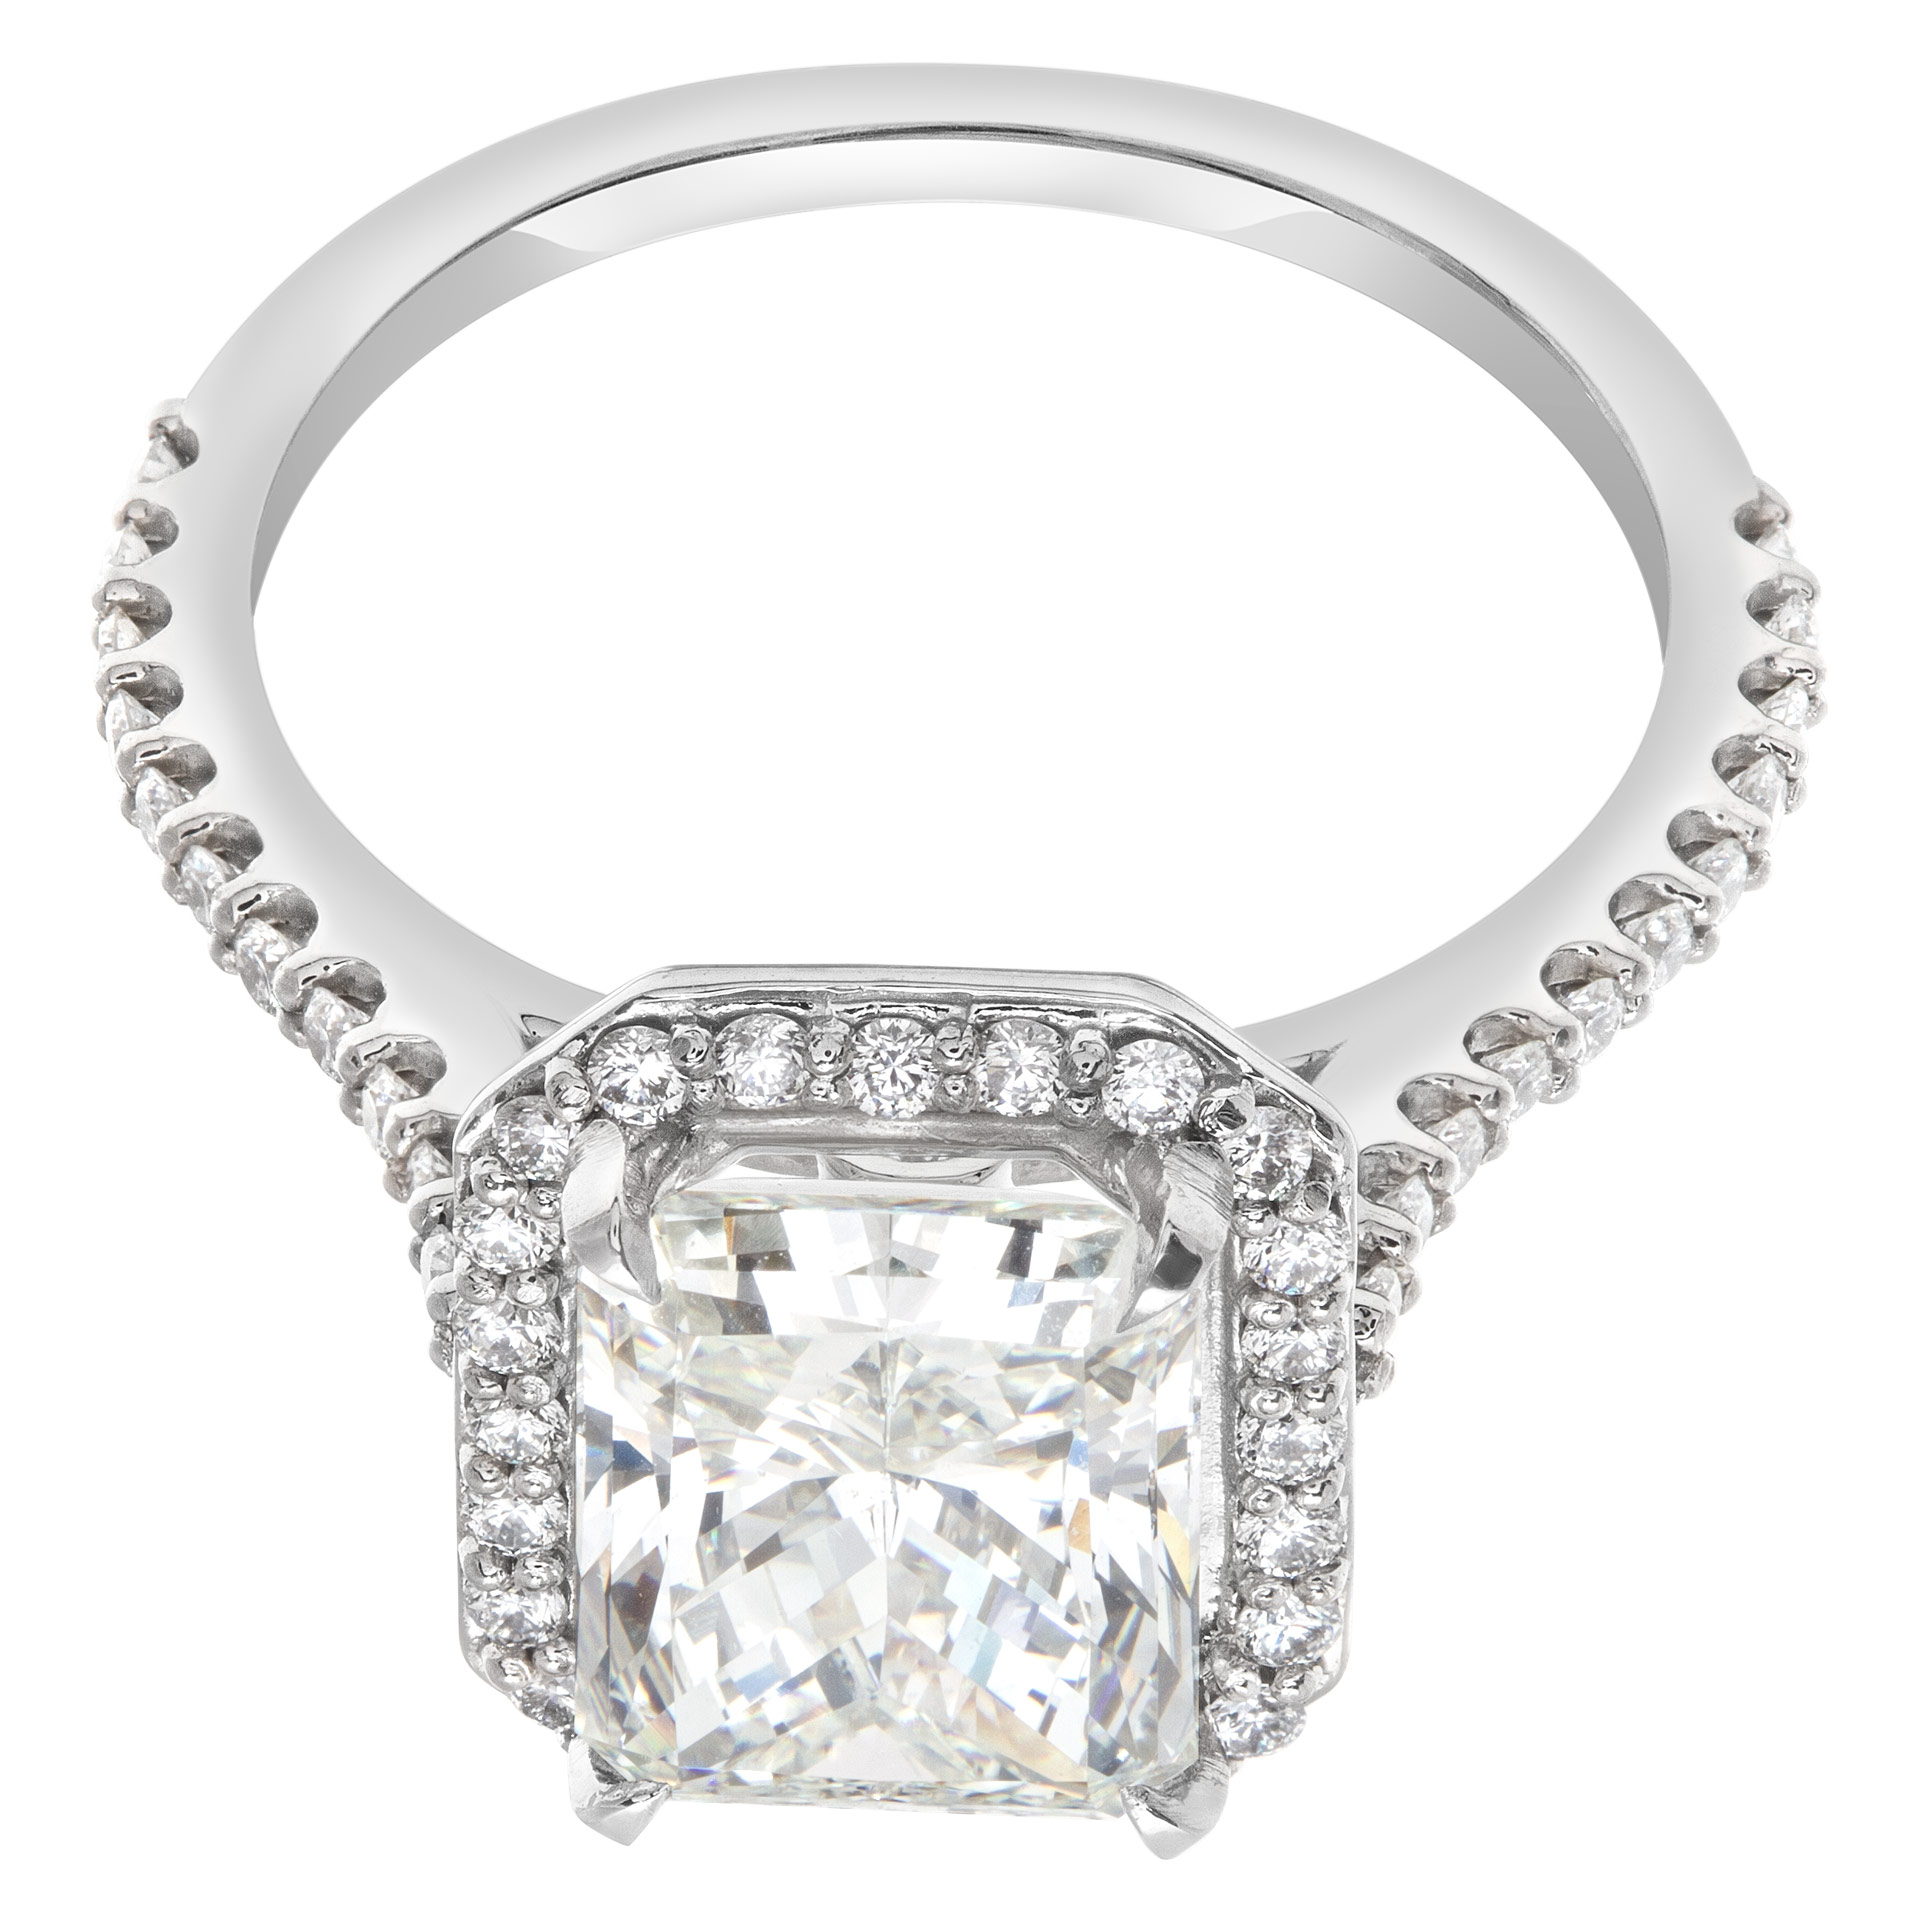 GIA certified cut- cornered rectangular modified brilliant cut diamond 3.01 carat (I color, VS2 clarity image 5